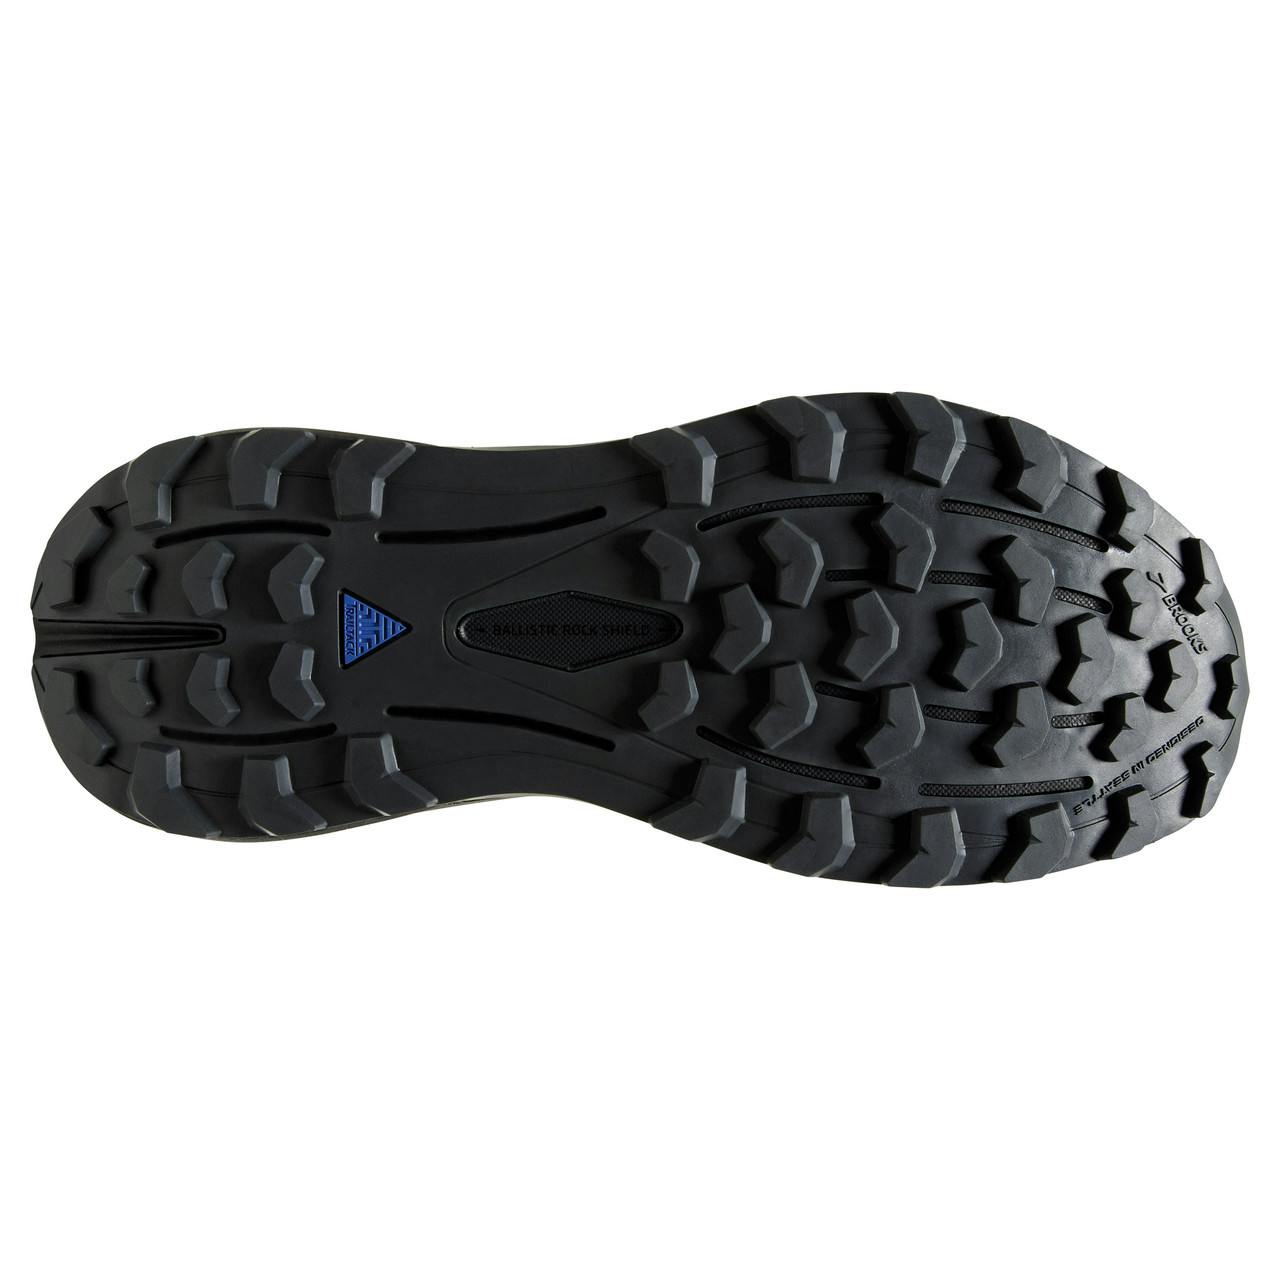 Cascadia 16 Trail Running Shoes Black/Ebony/Yucca